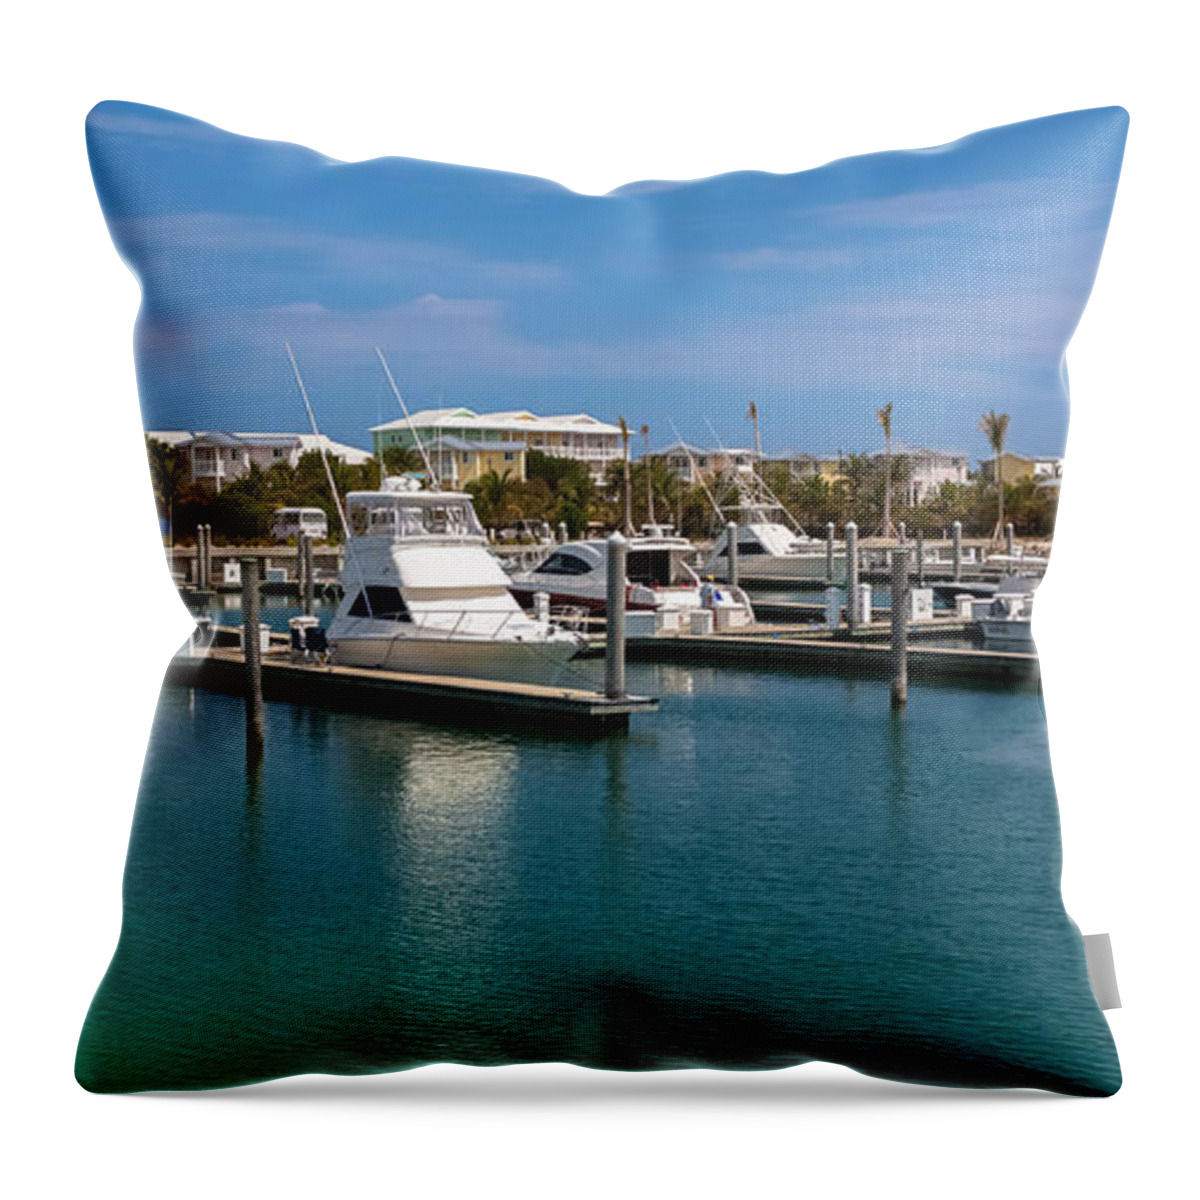 Bahamas Throw Pillow featuring the photograph Bimini Bay Resort by Ed Gleichman